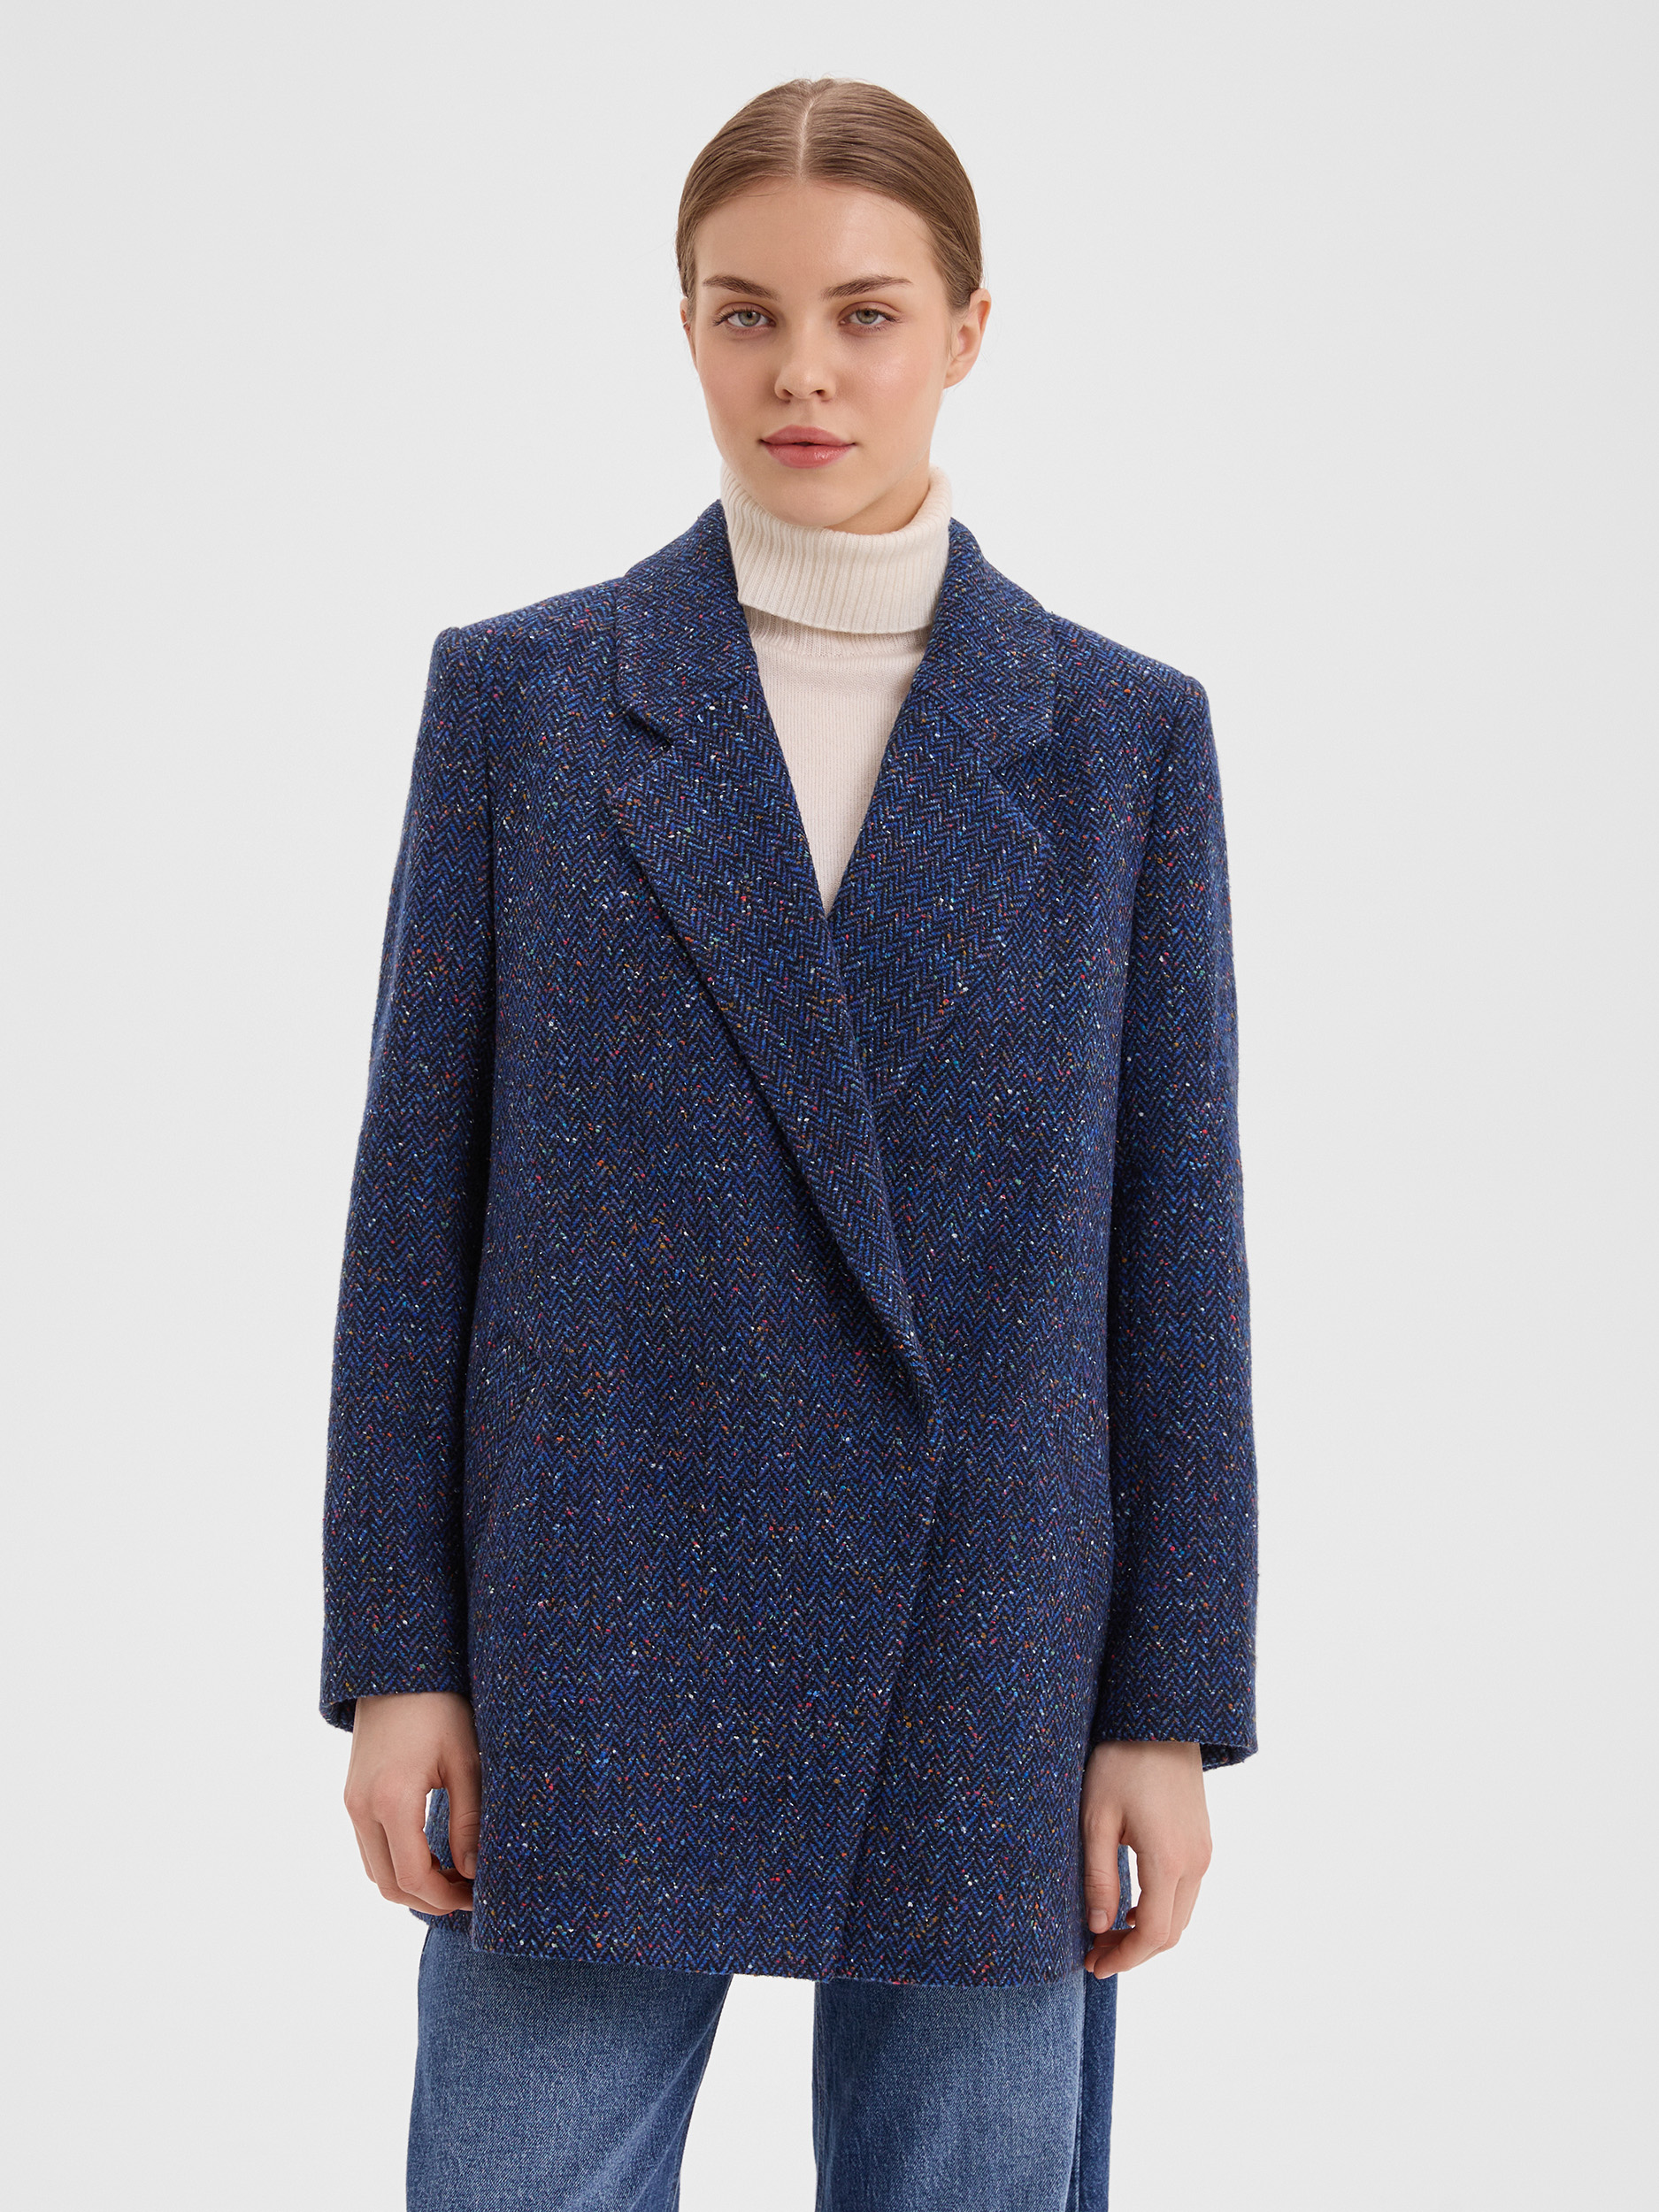 Пальто женское N.O.M.I C23106-701 синее 50 RU